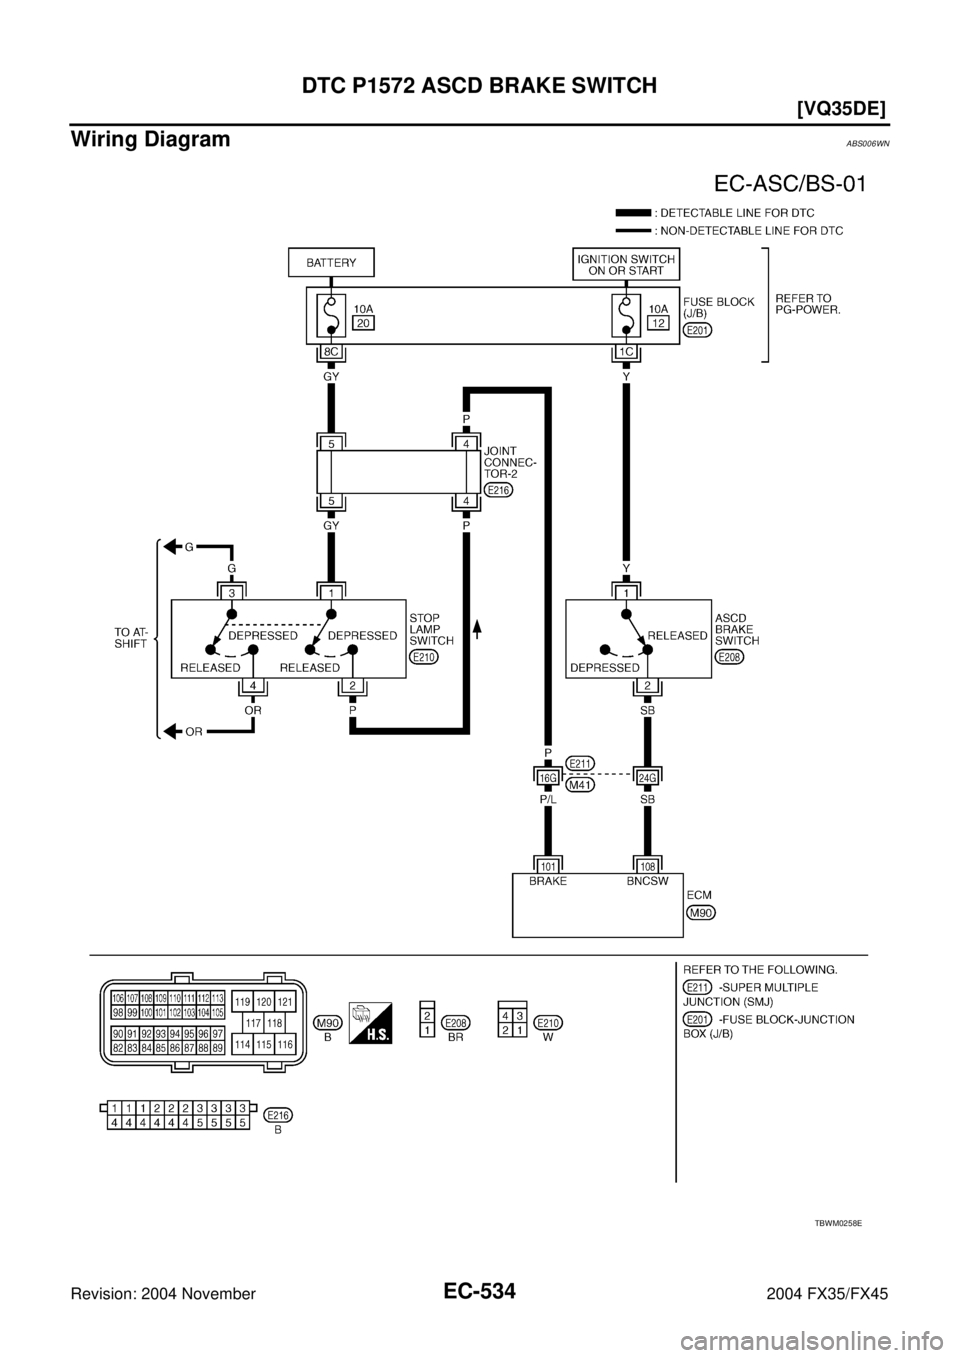 INFINITI FX35 2004  Service Manual EC-534
[VQ35DE]
DTC P1572 ASCD BRAKE SWITCH
Revision: 2004 November 2004 FX35/FX45
Wiring Diagram ABS006WN
TBWM0258E 